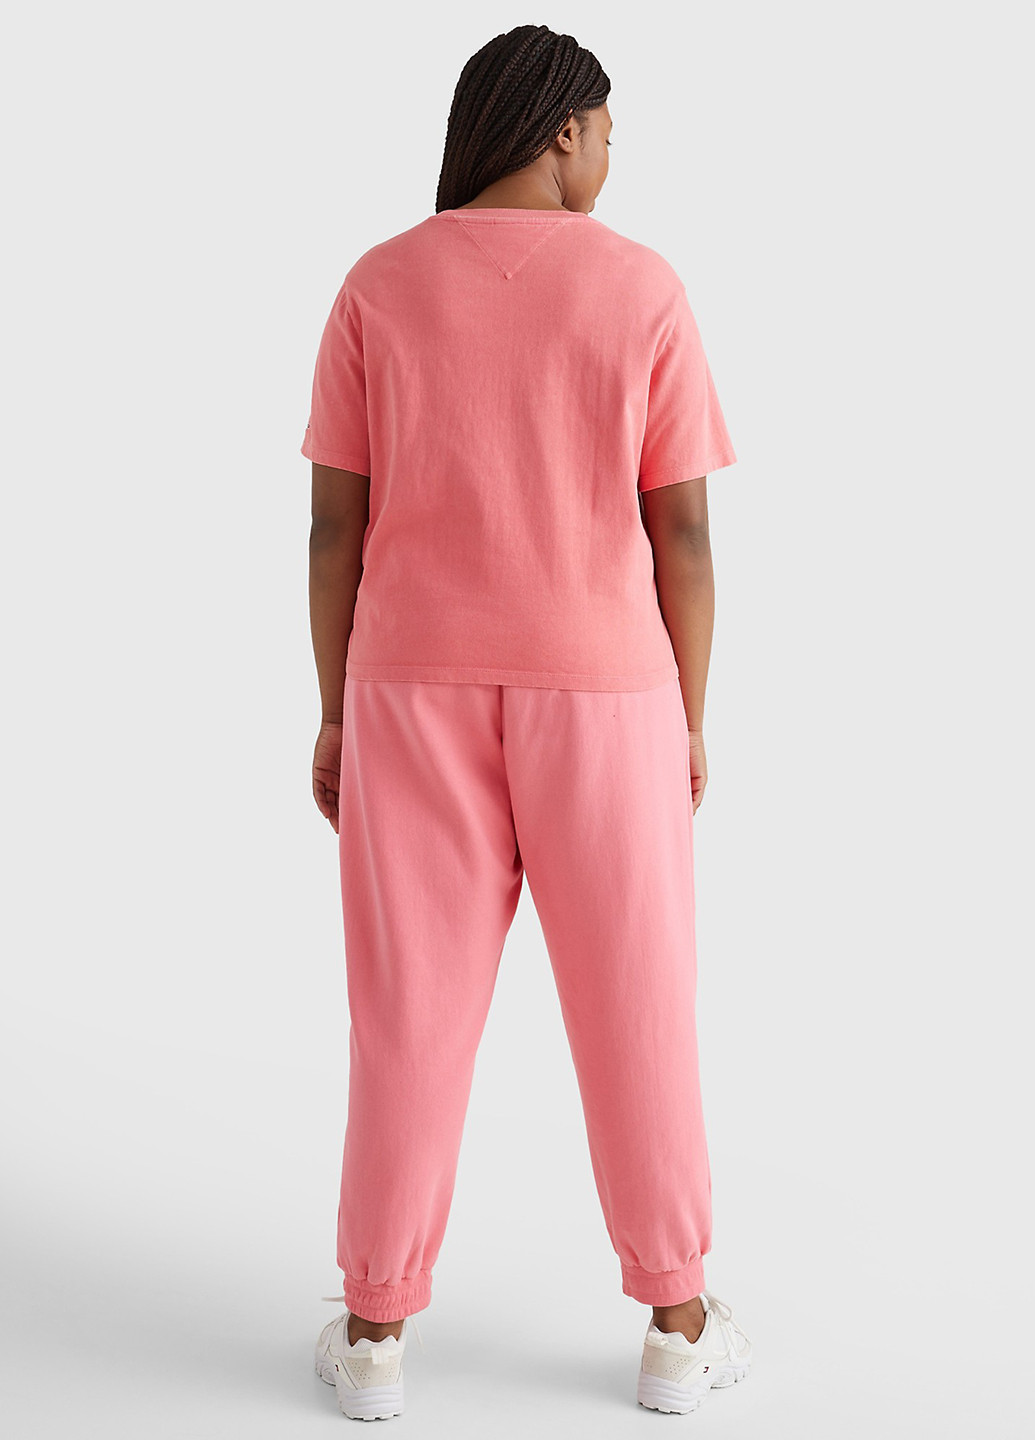 Розовая летняя футболка Tommy Hilfiger